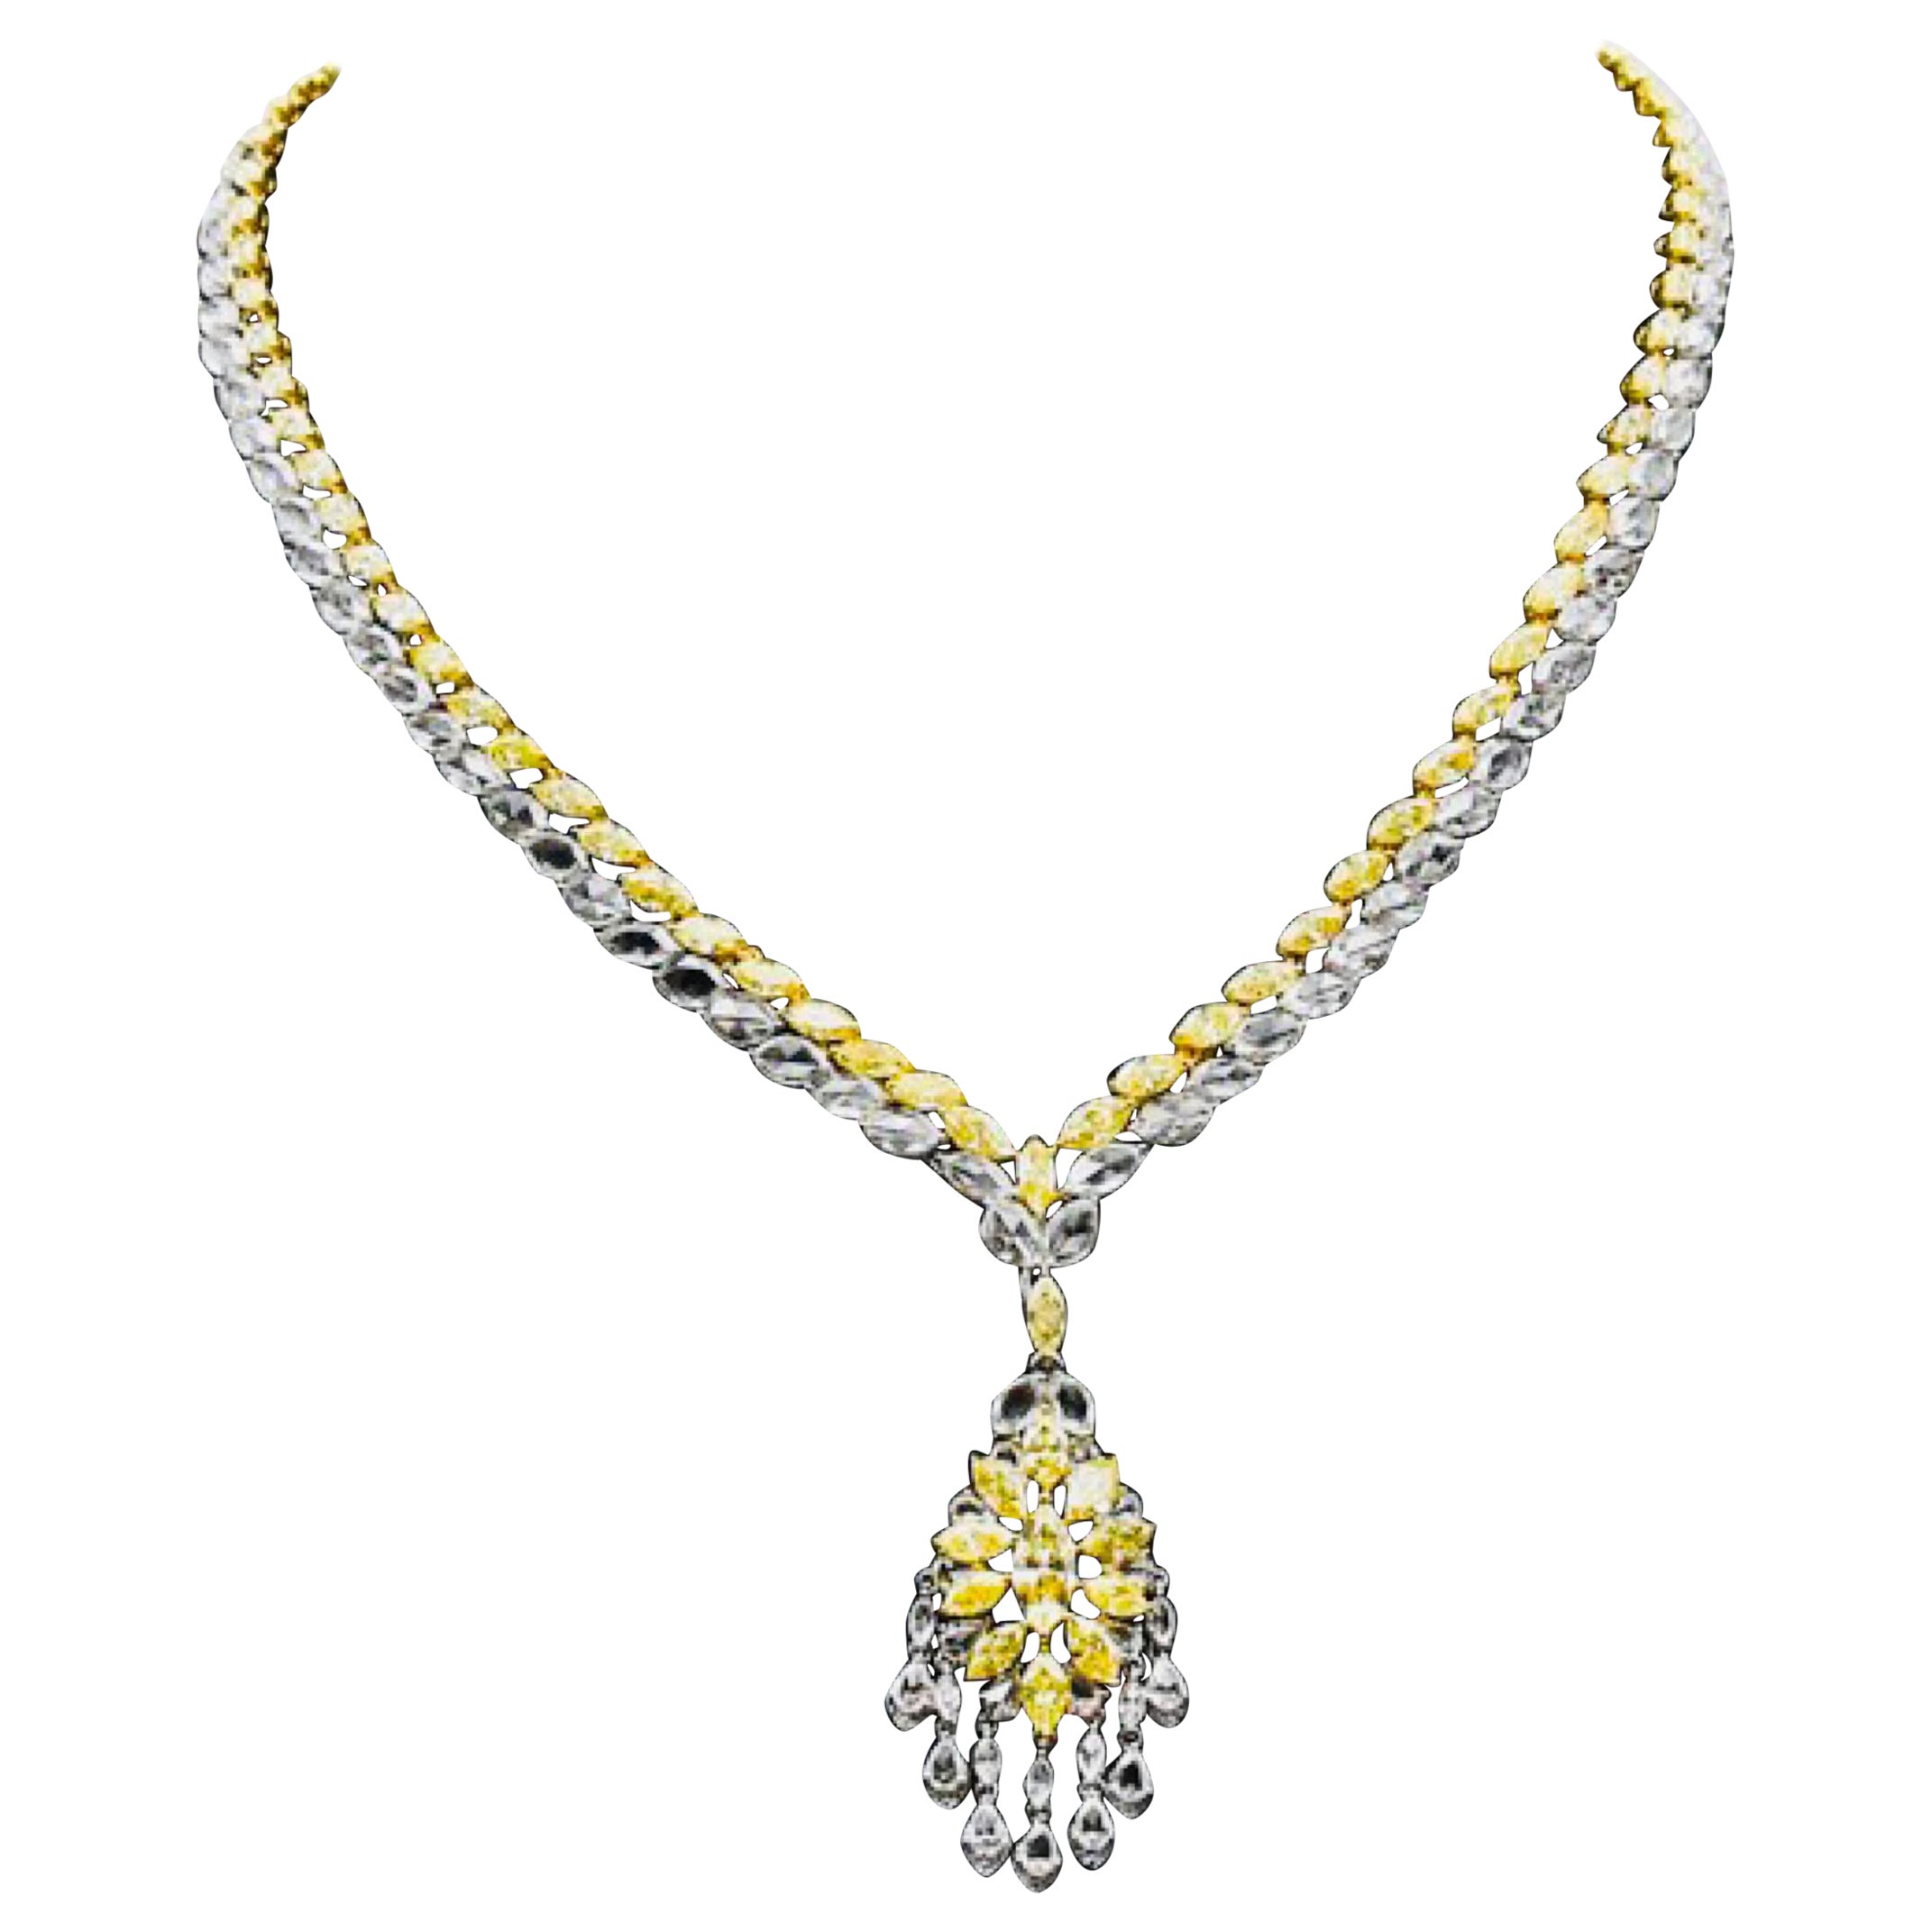 Emilio Jewelry, collier de diamants jaunes fantaisie de 20,73 carats